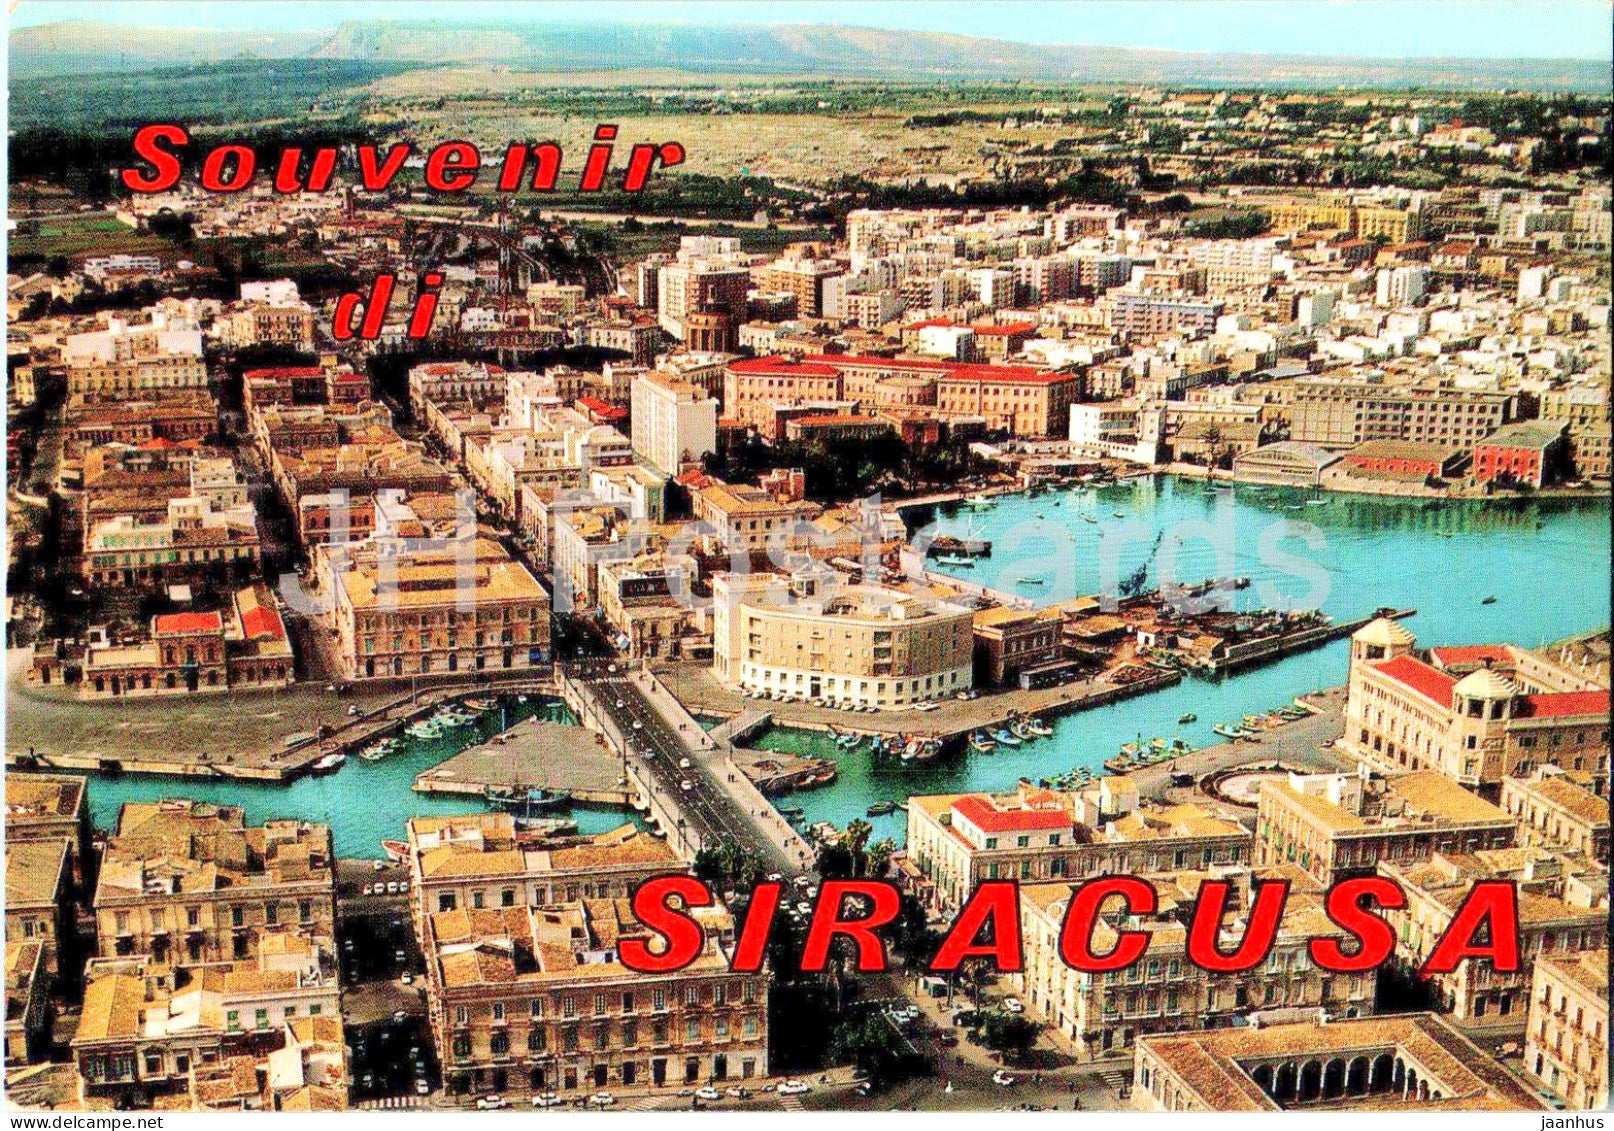 Souvenir di Siracusa - Panorama and Umberto bridge - 103 - Italy - unused - JH Postcards